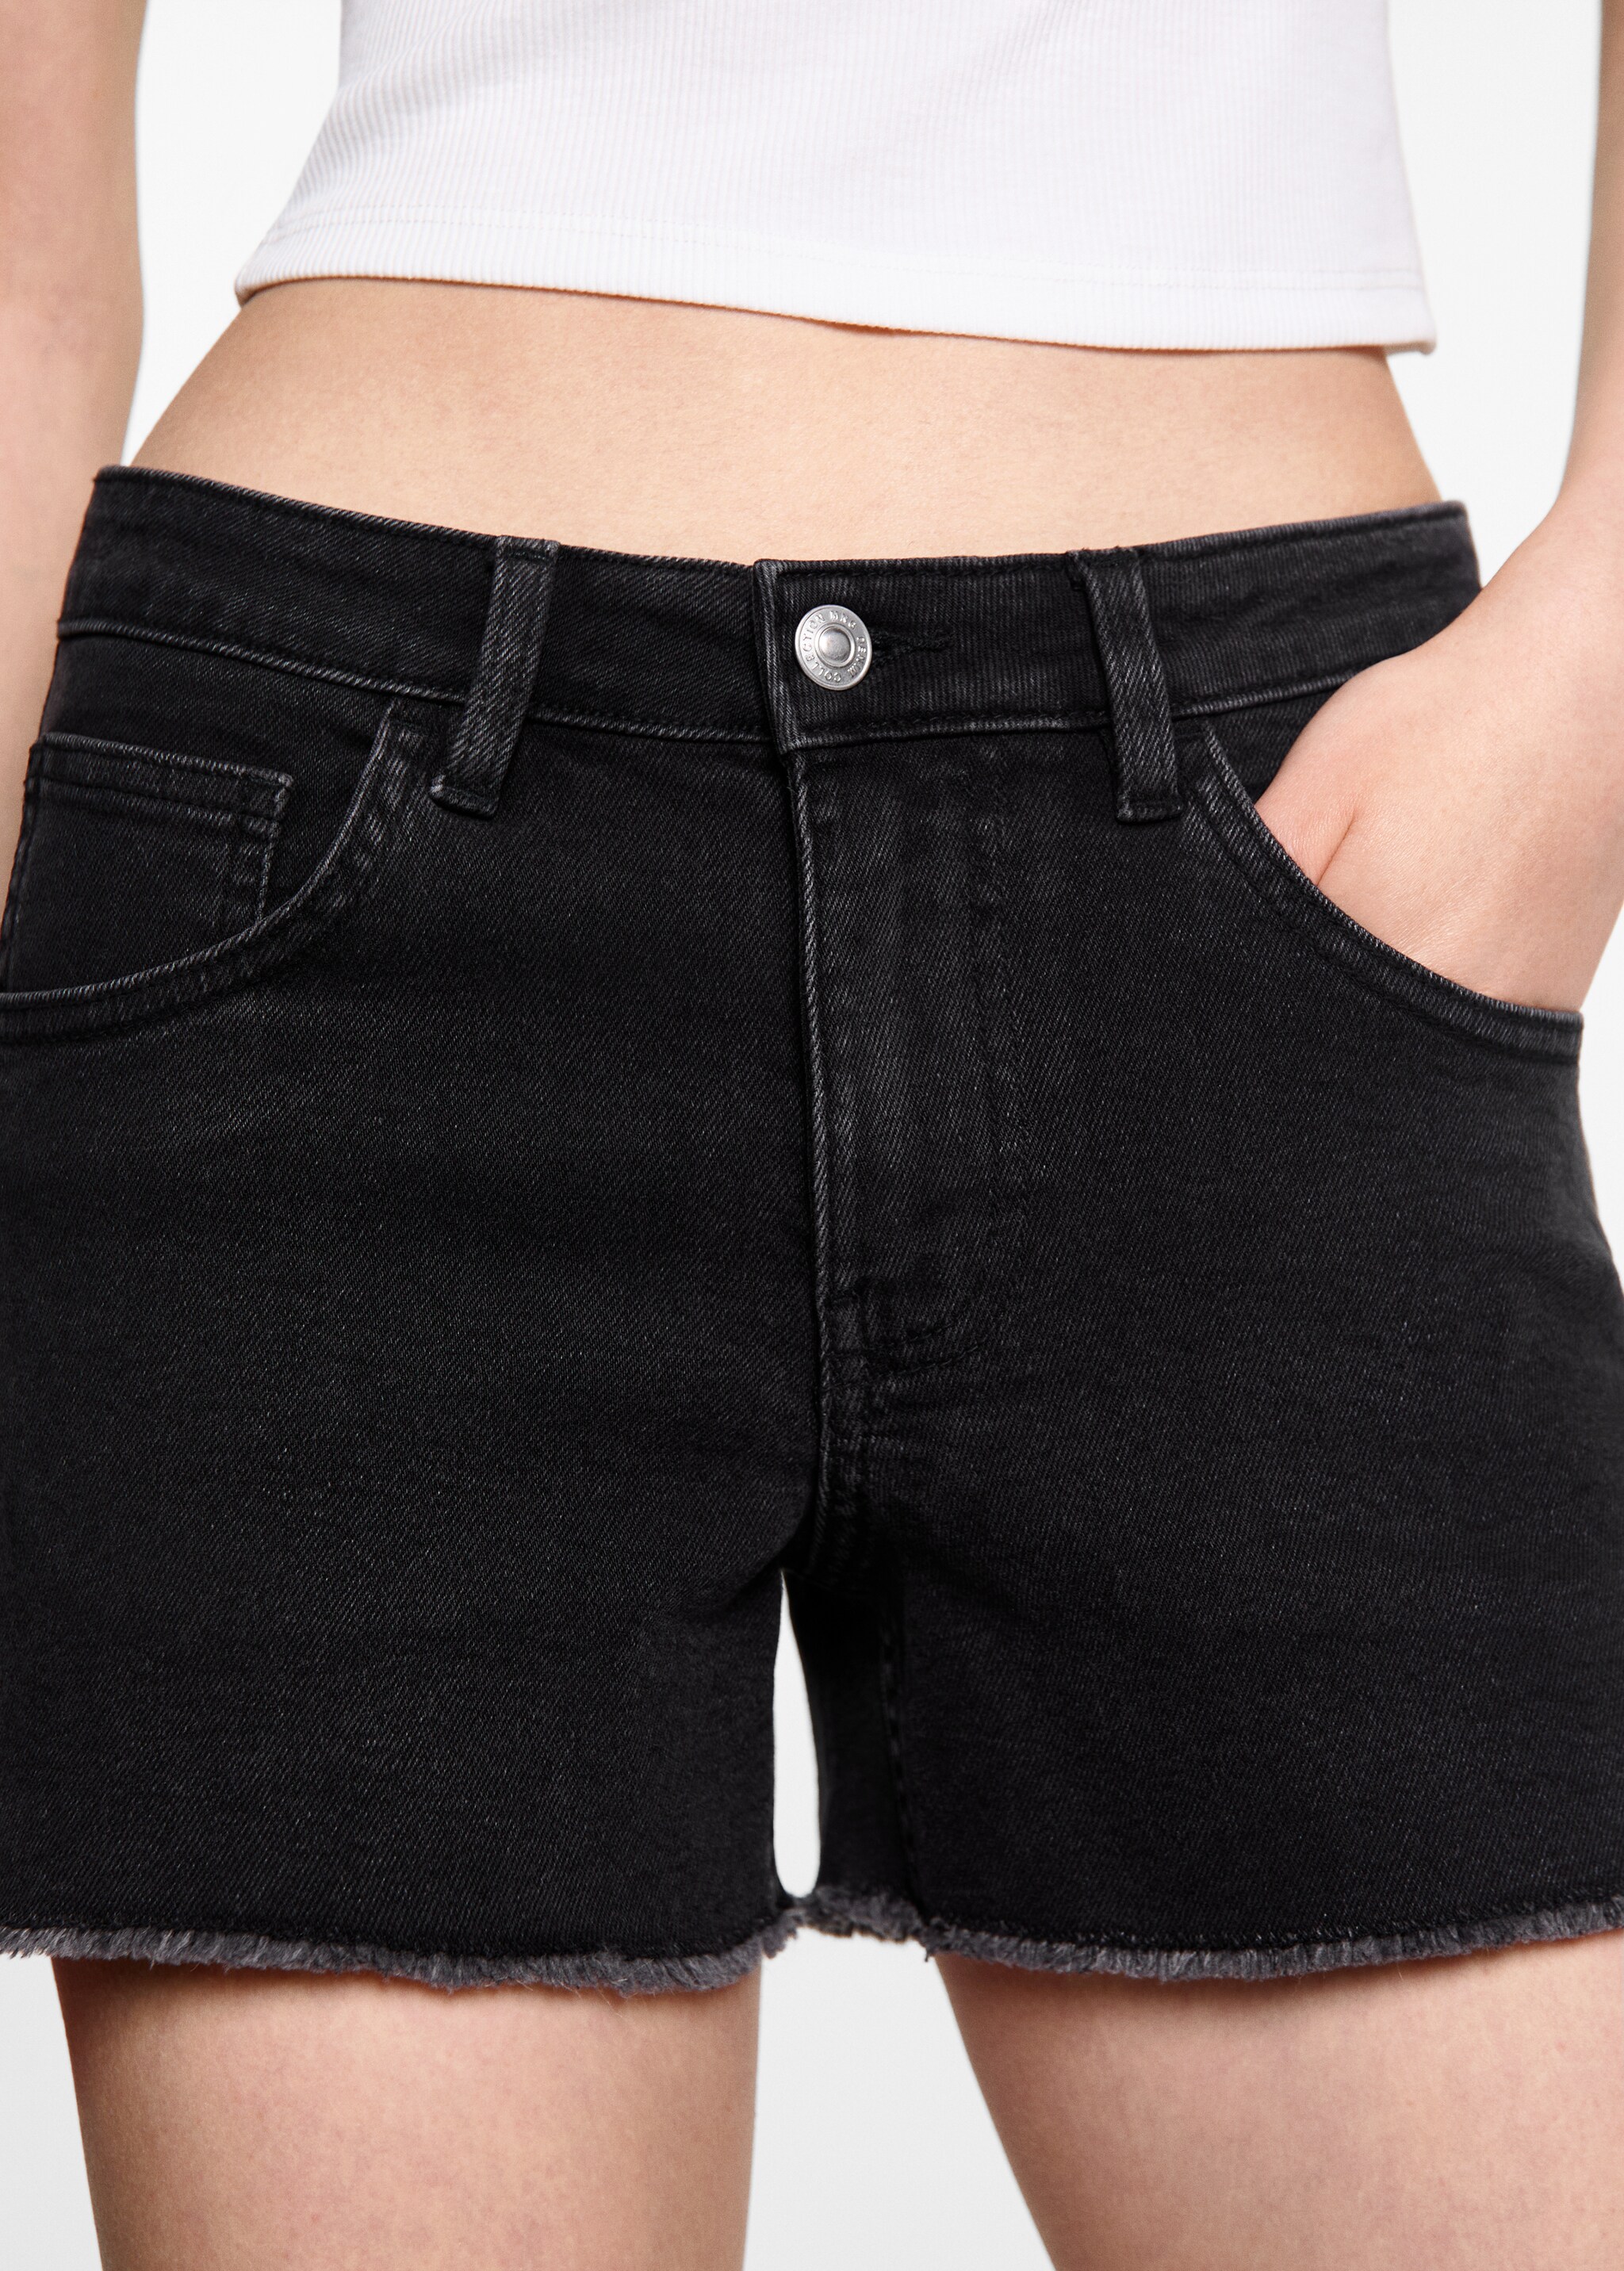 Medium-waist denim shorts - Details of the article 6